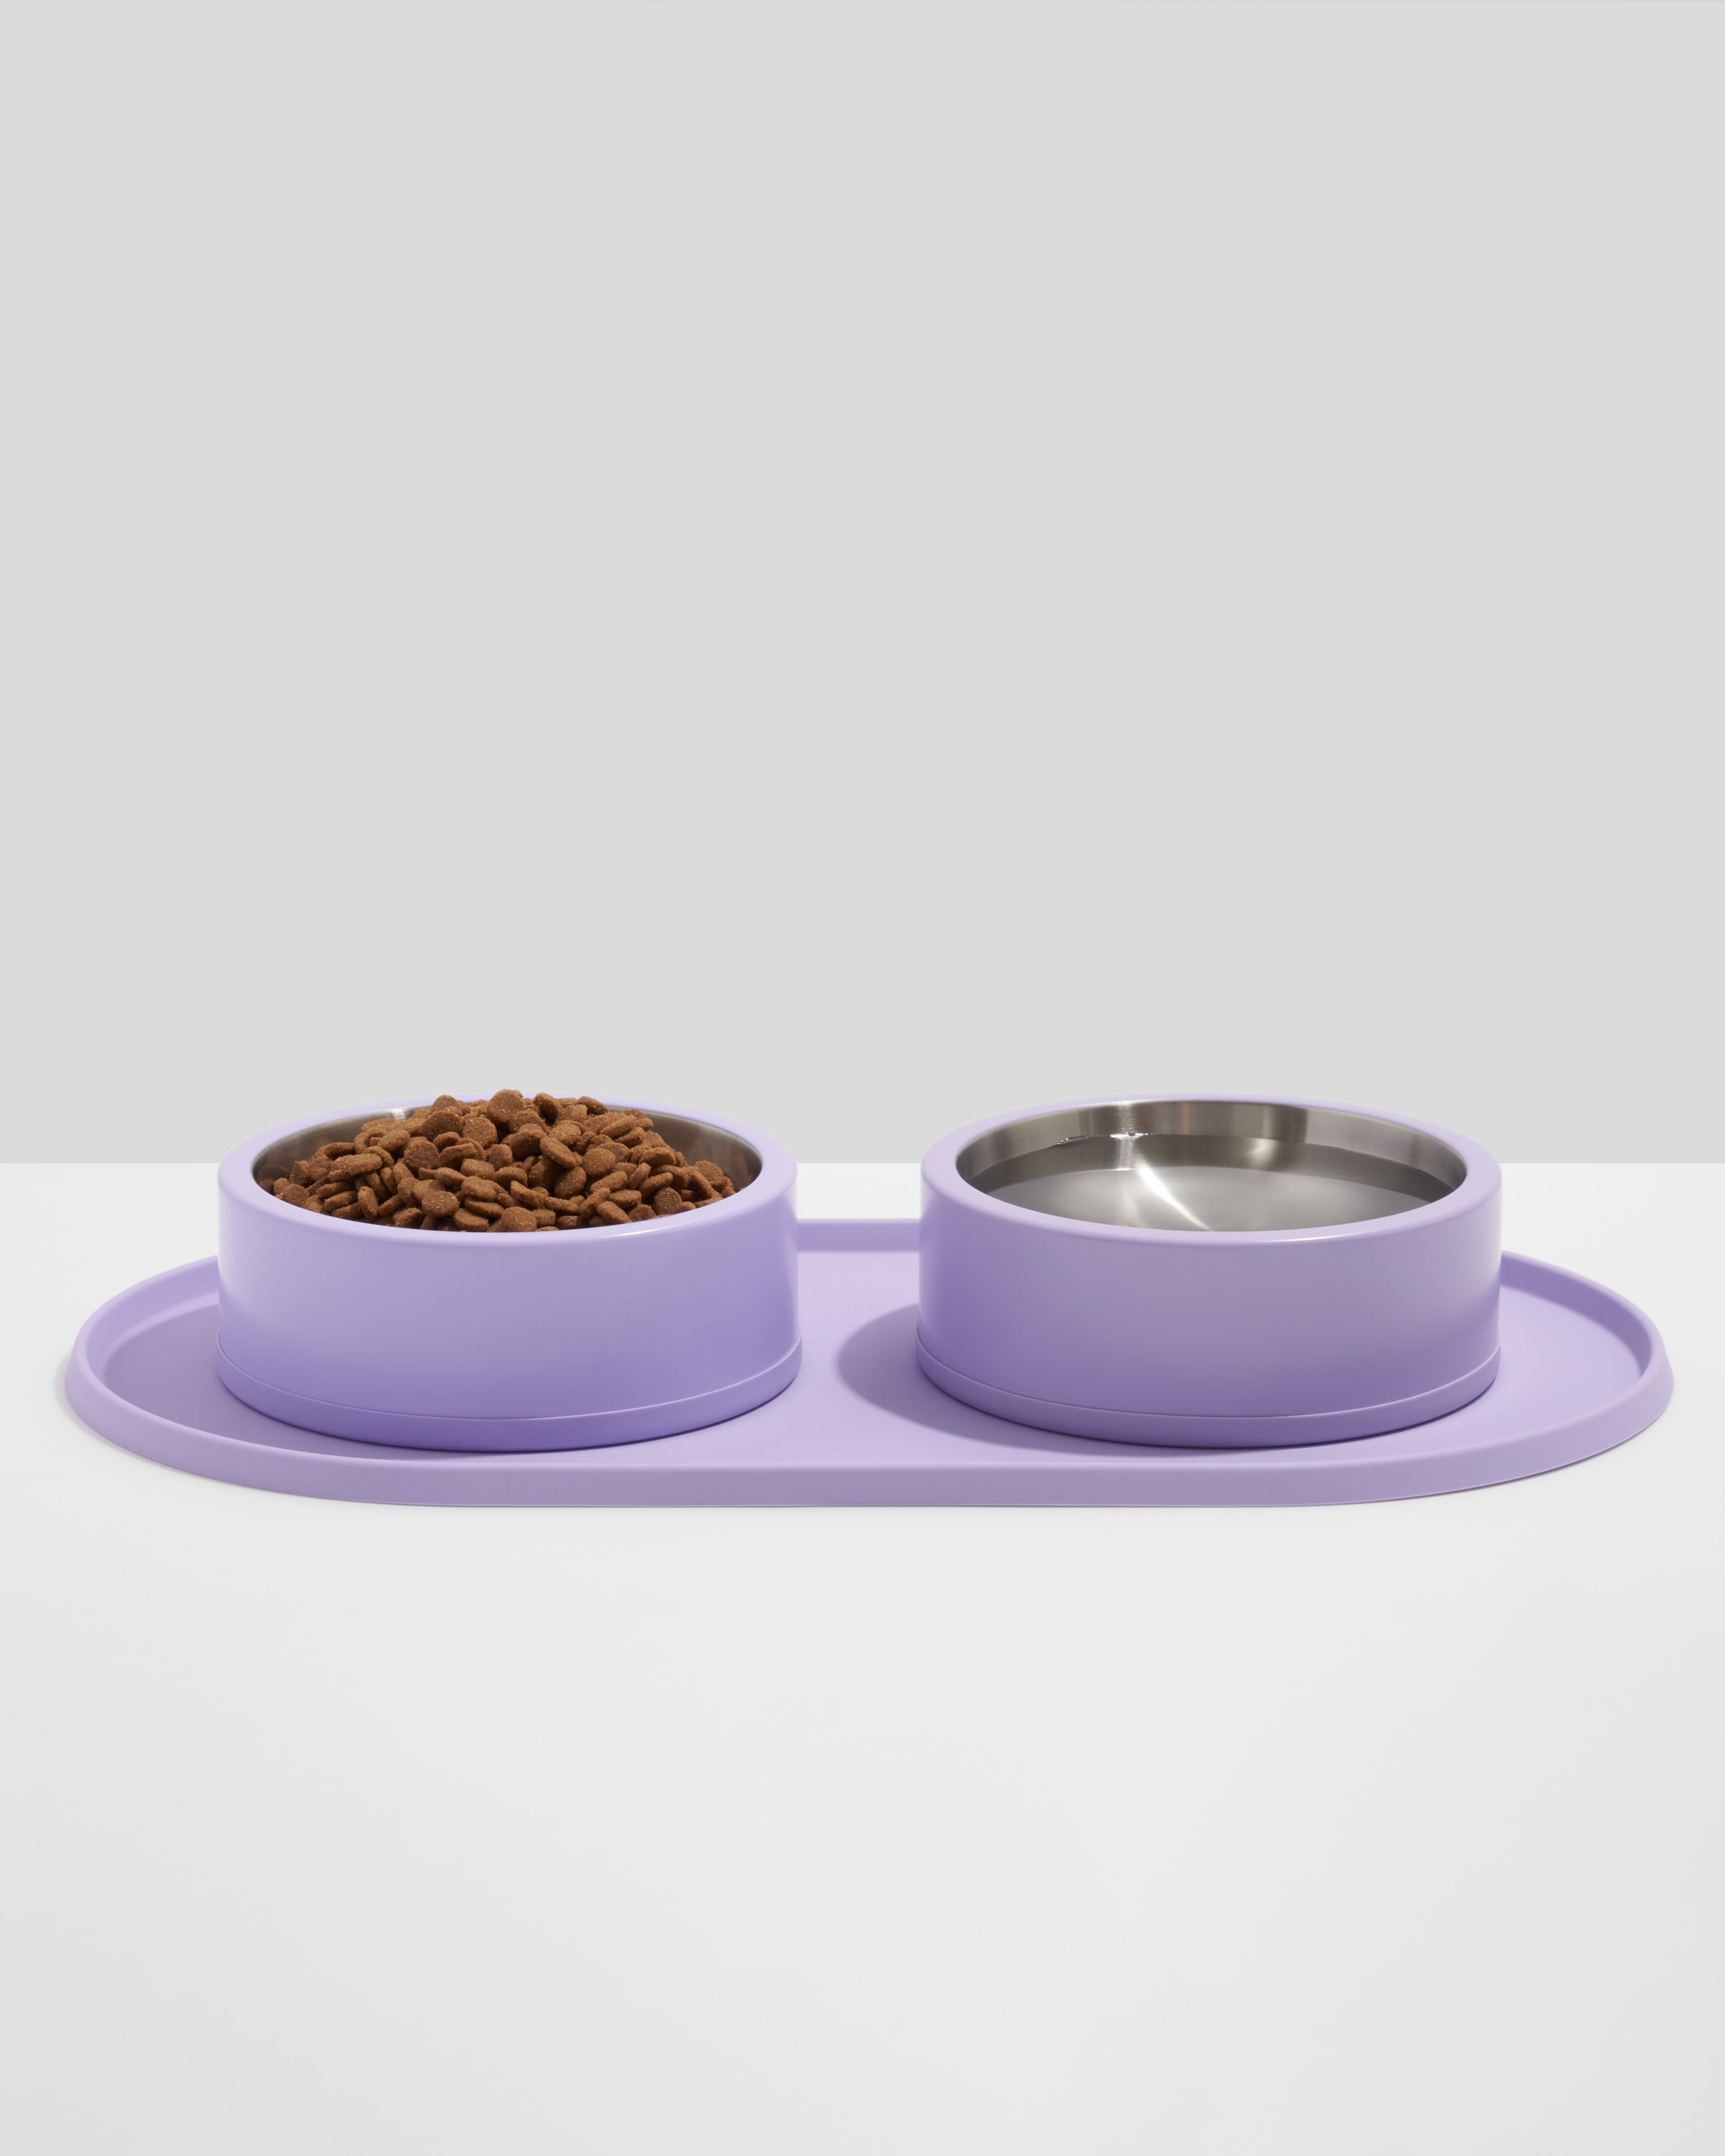 FRISCO Silicone Dog & Cat Food Mat, Gray, Medium 